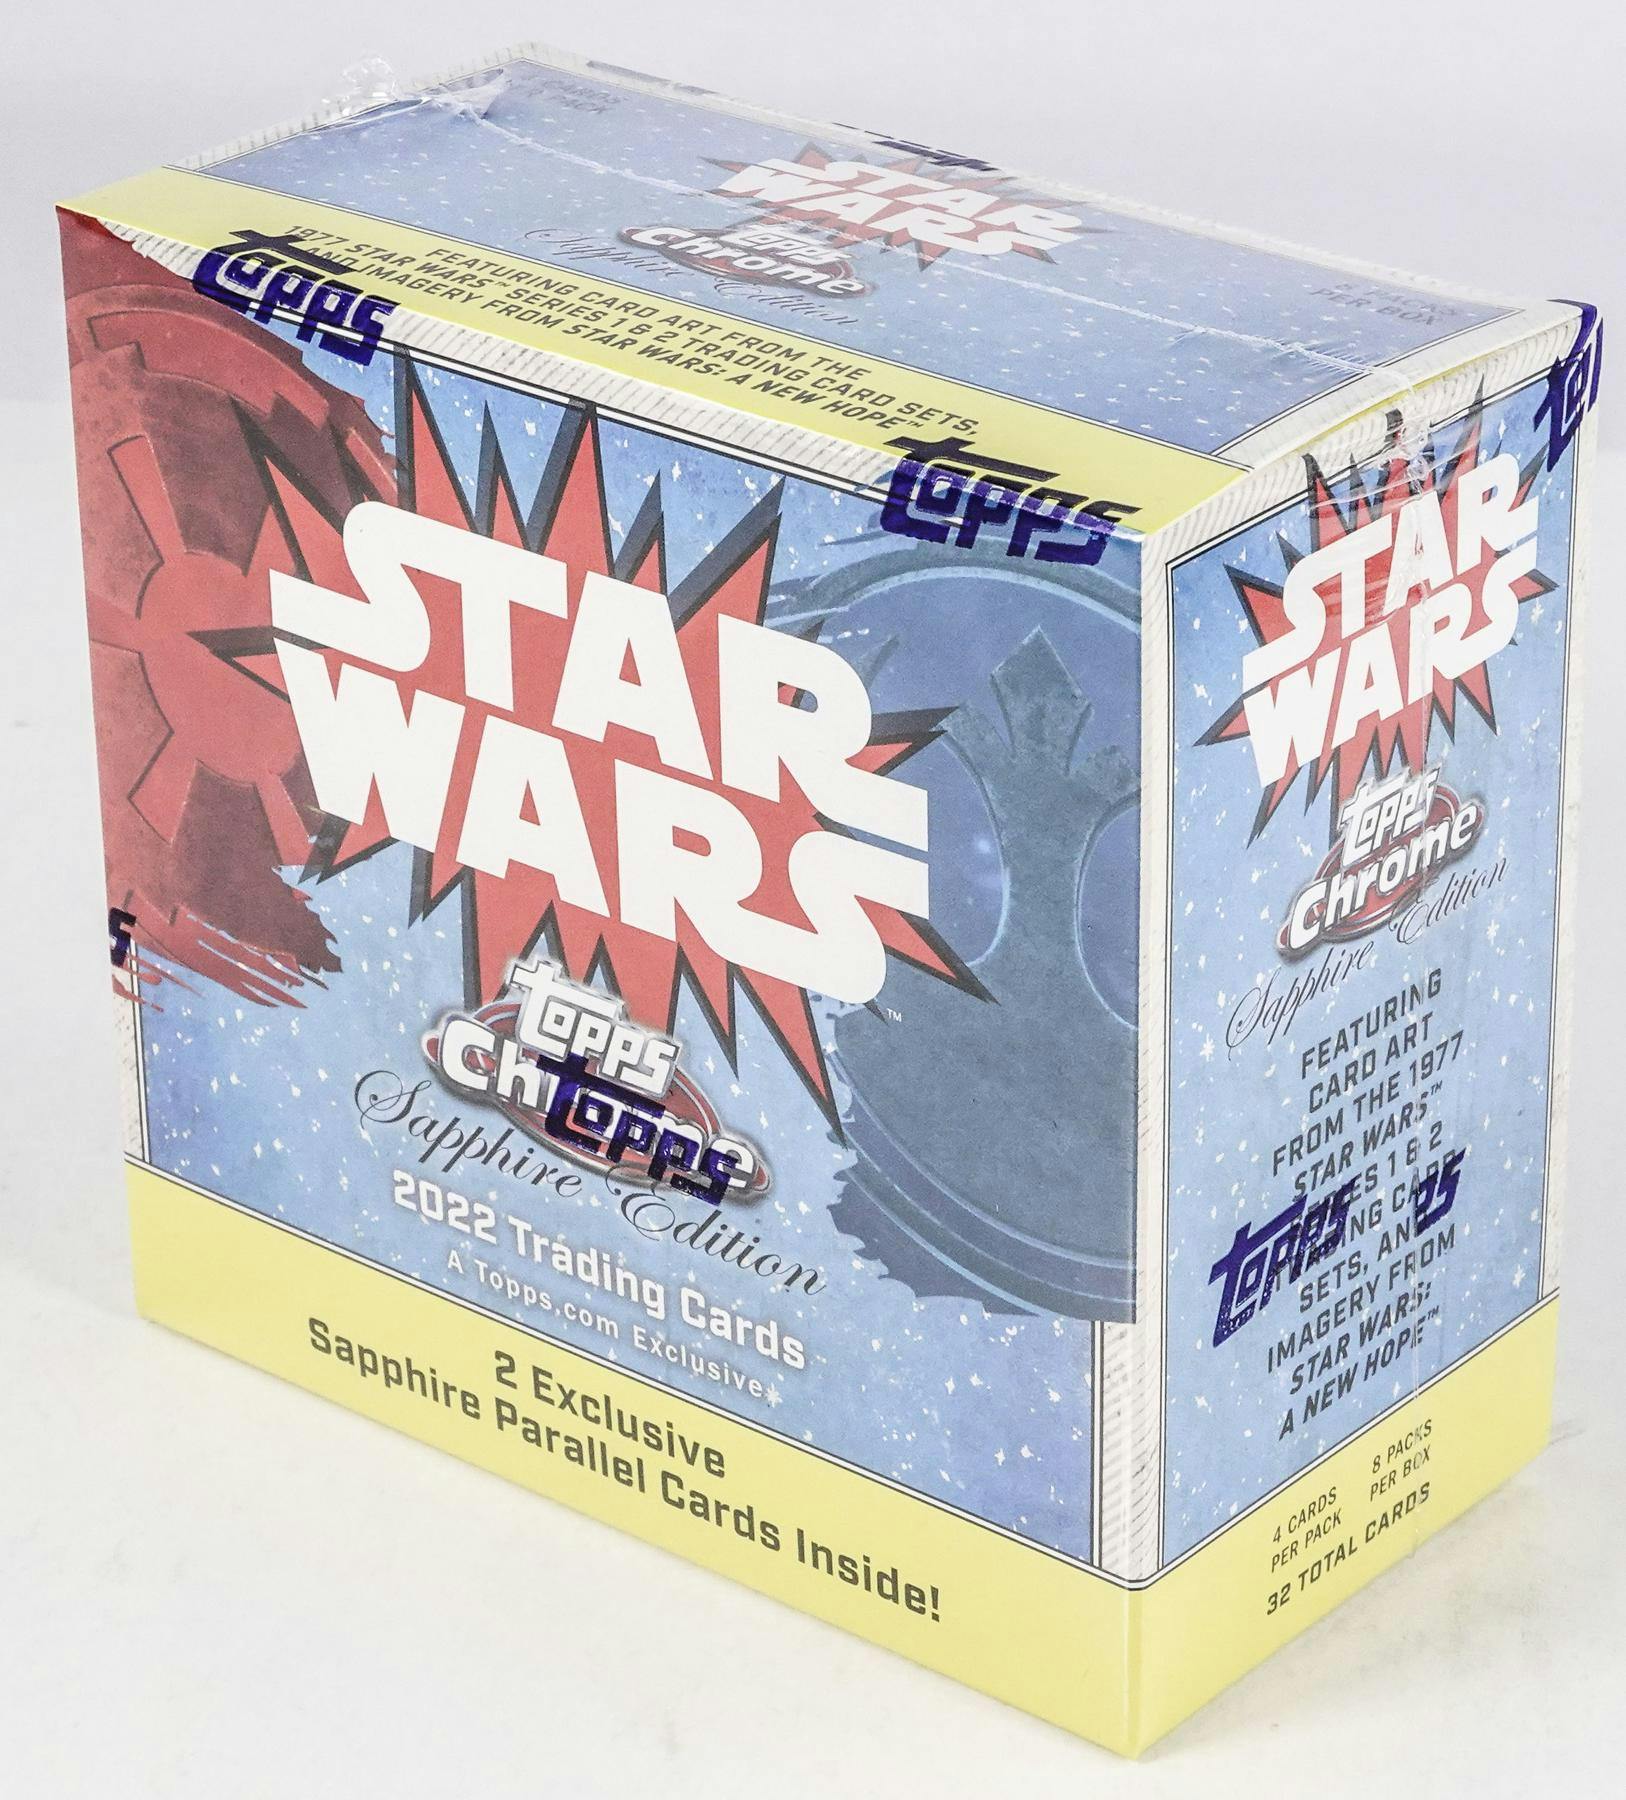 Star Wars Chrome Sapphire Edition Hobby Box (Topps 2022) DA Card World